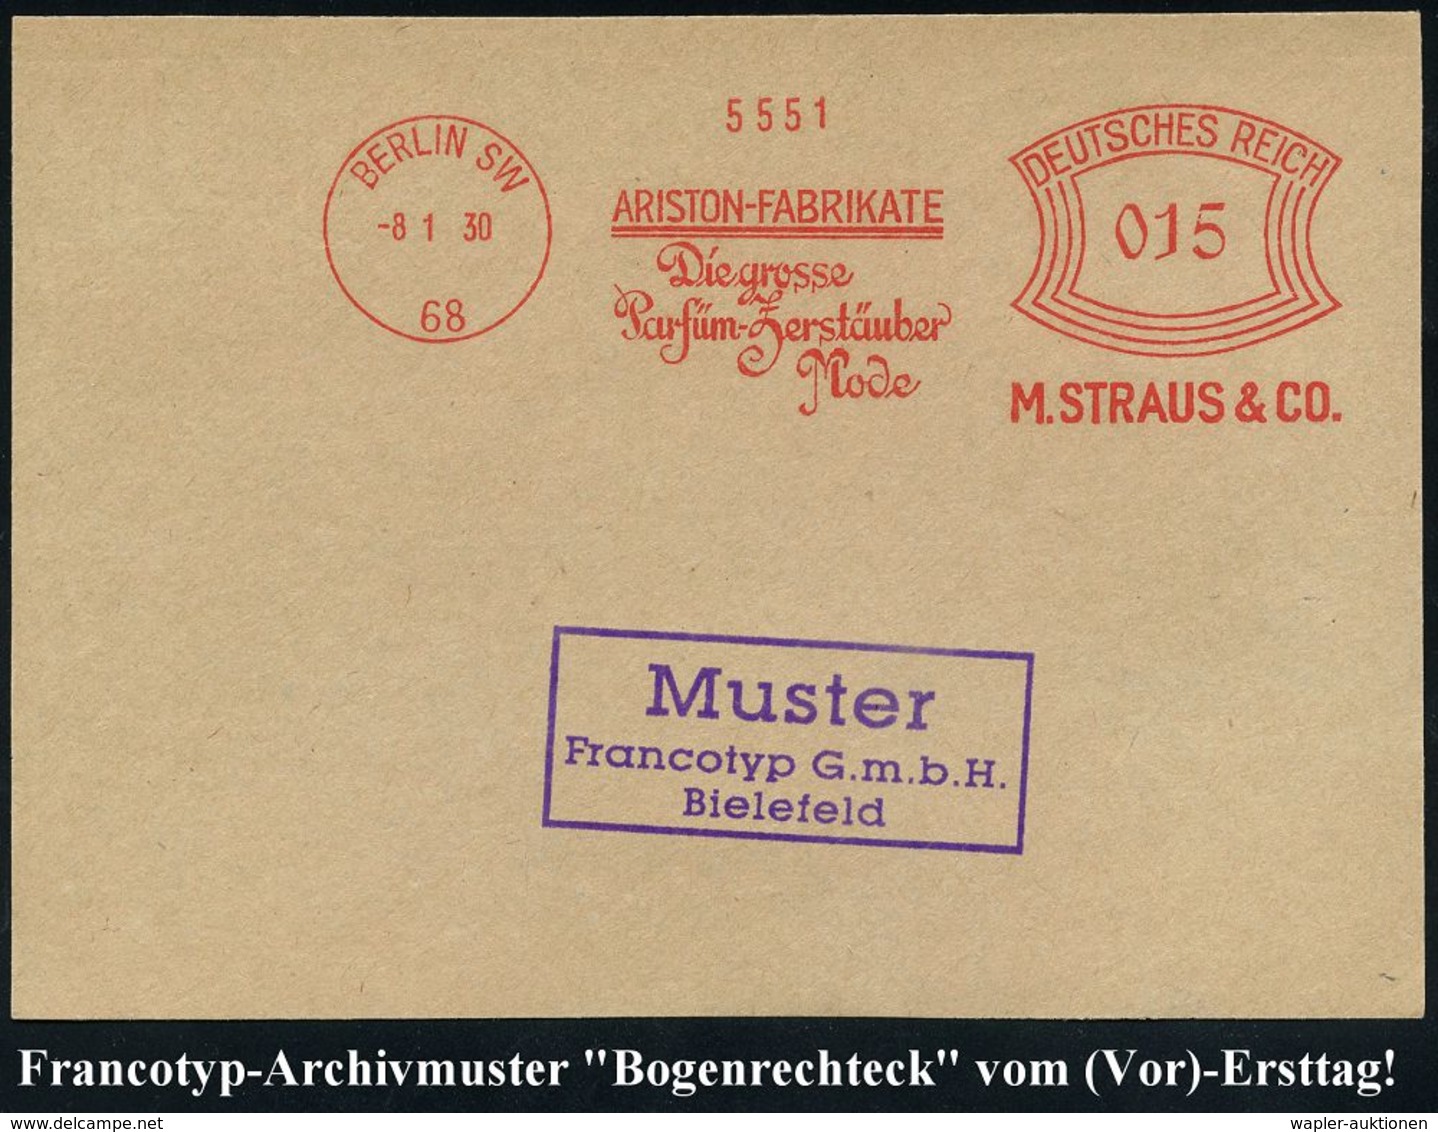 KOSMETIK / PARFÜM : BERLIN SW/ 68/ ARISTON-FABRIKATE/ ..Parfüm-Zerstäuber../ M.STRAUS & CO 1930 (8.1.) AFS, Francotyp-Ar - Farmacia